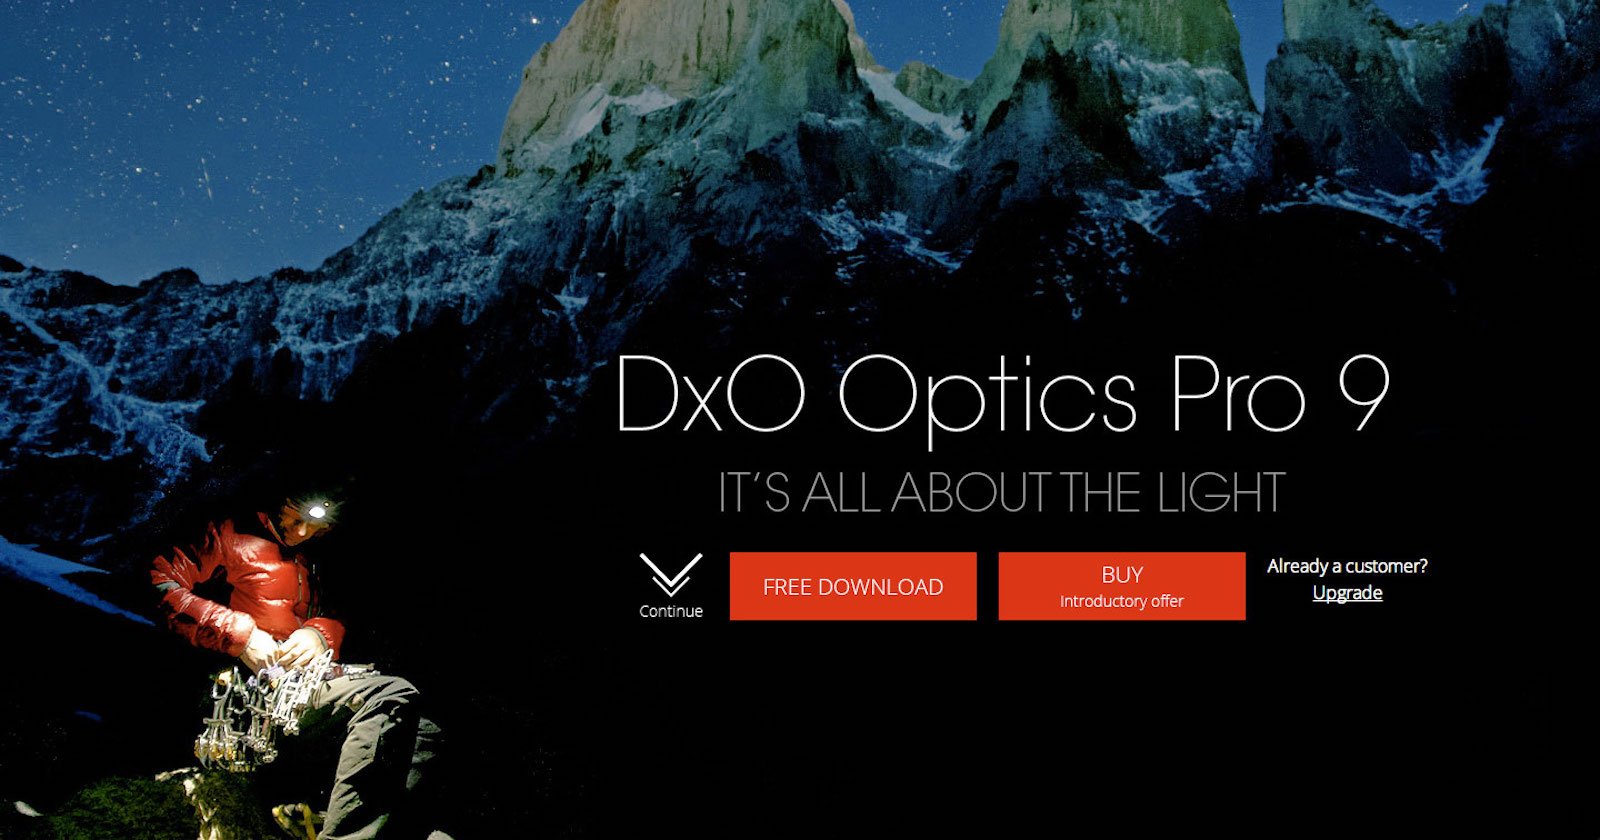 dxo optics pro 9 review